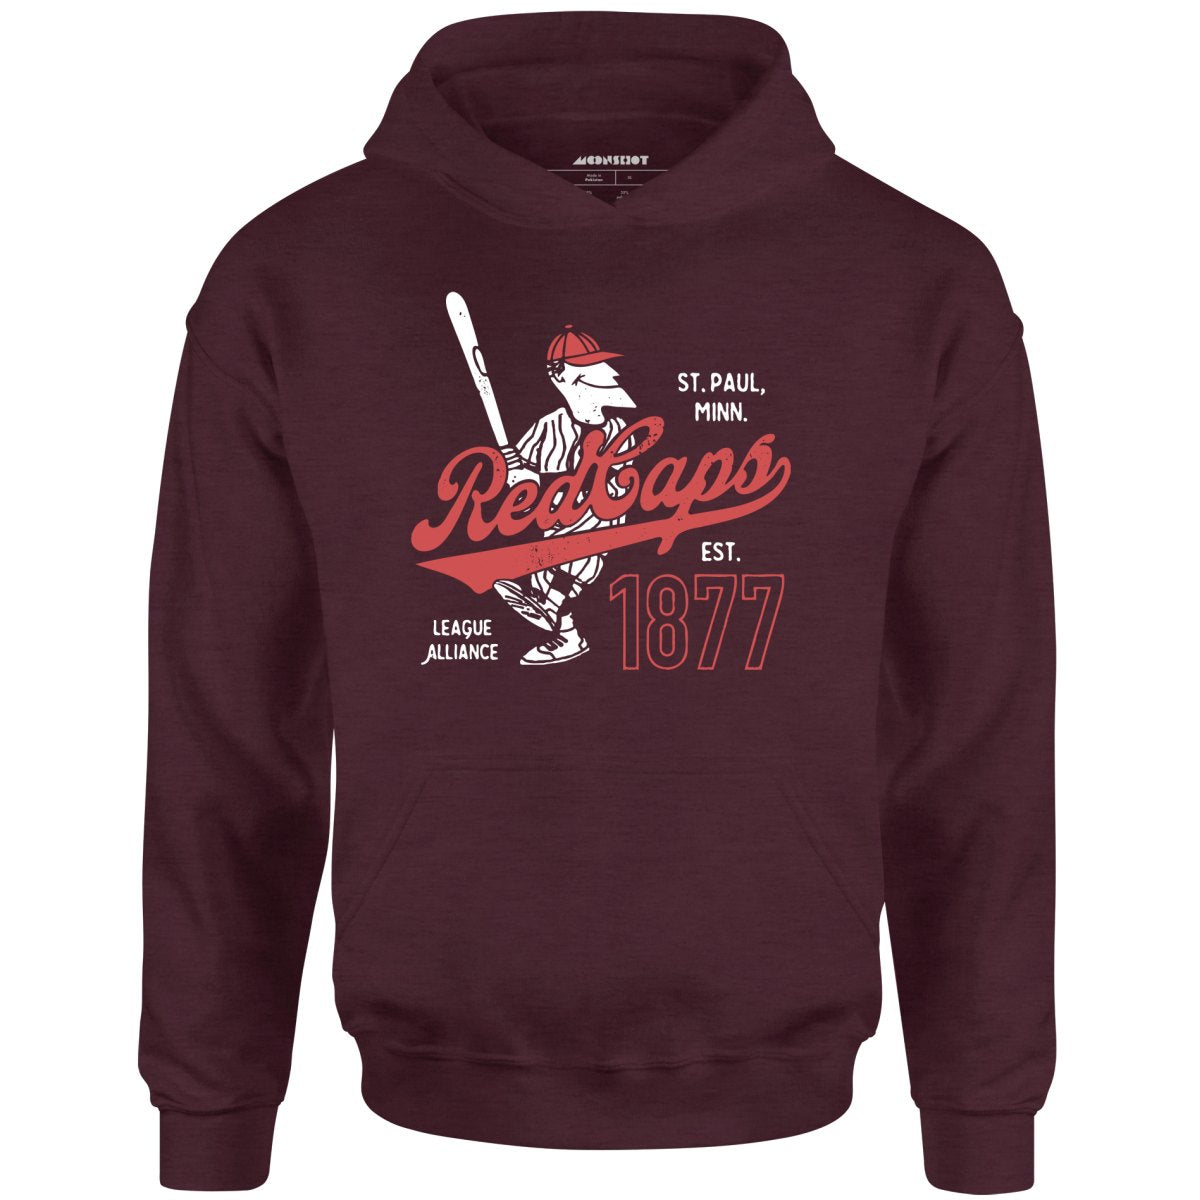 Saint Paul Red Caps - Minnesota - Vintage Defunct Baseball Teams - Unisex Hoodie